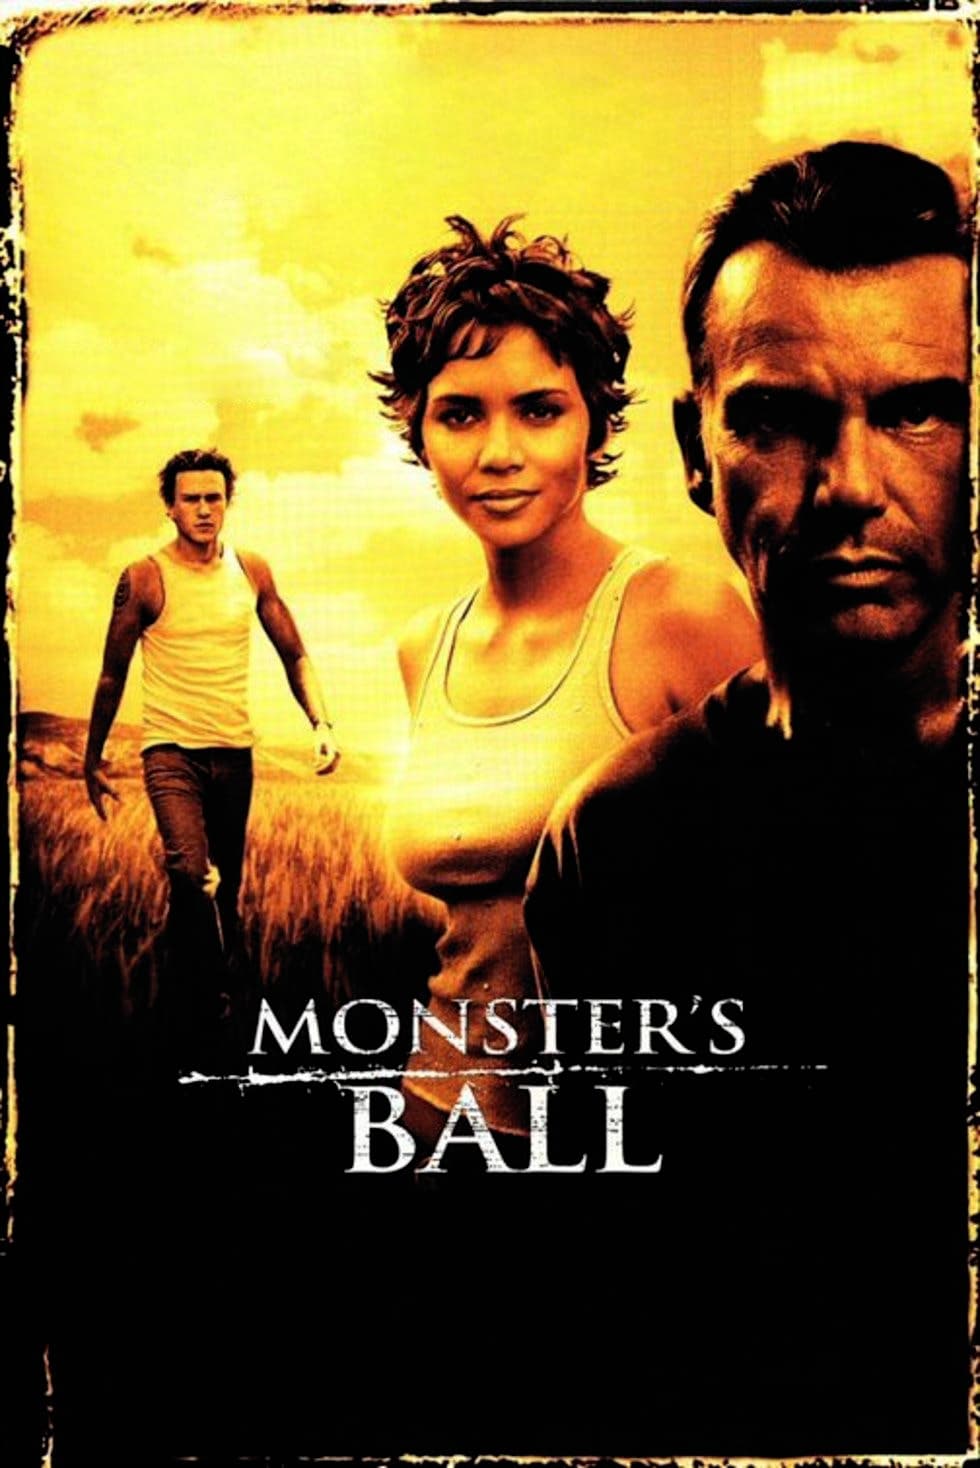 Plakat von "Monster's Ball"